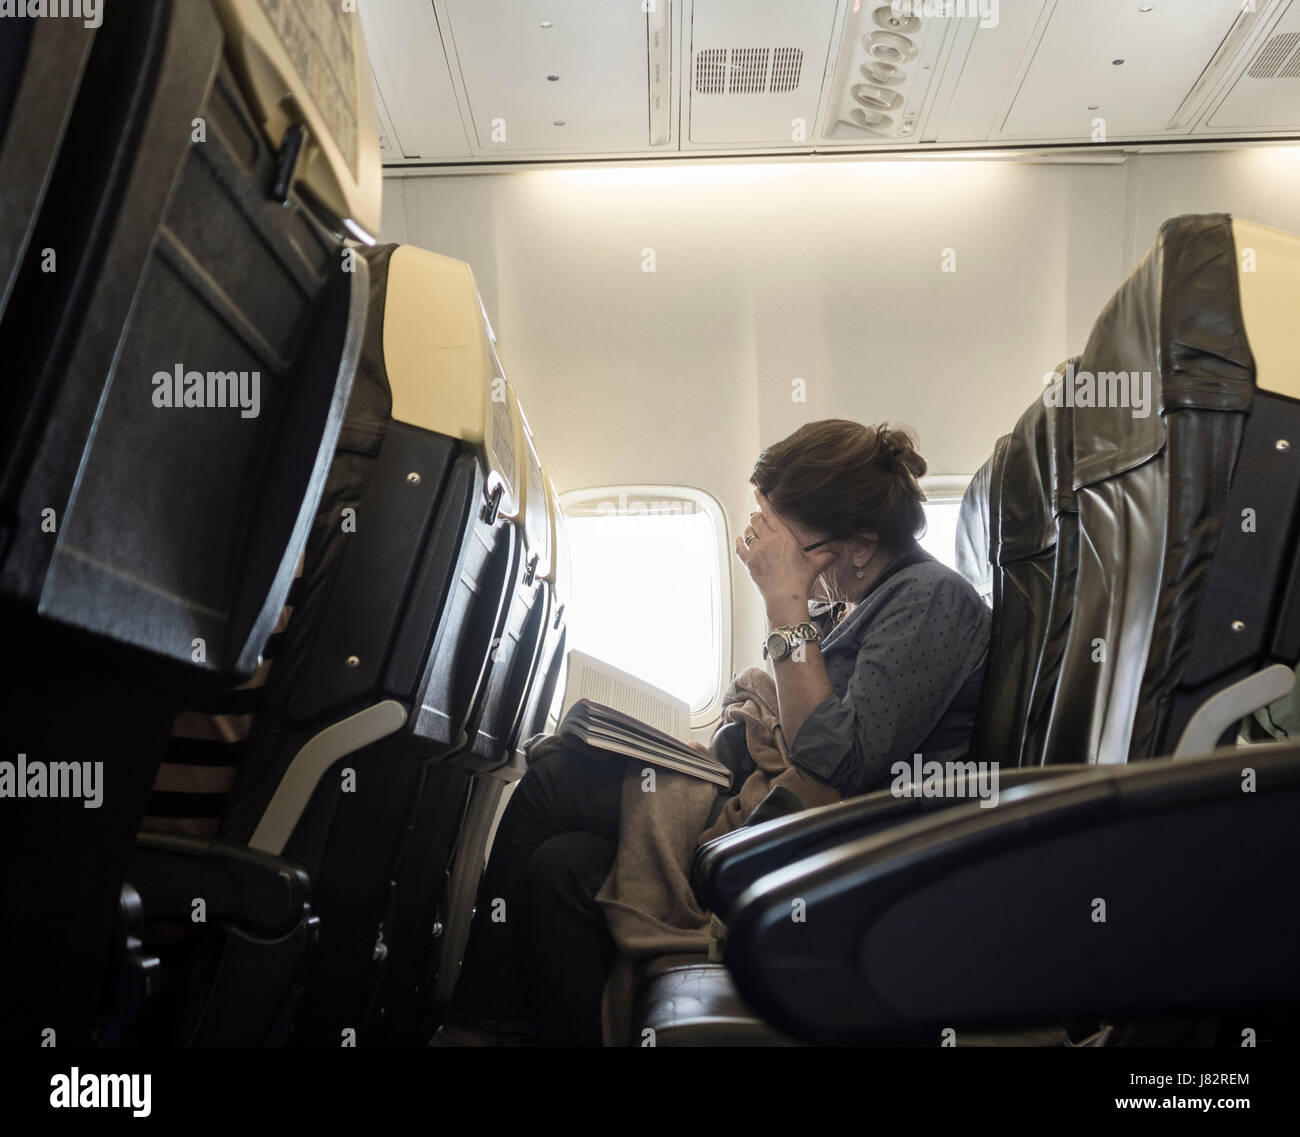 Ryanair flight: mature woman reading book in window seat. Stock Photo